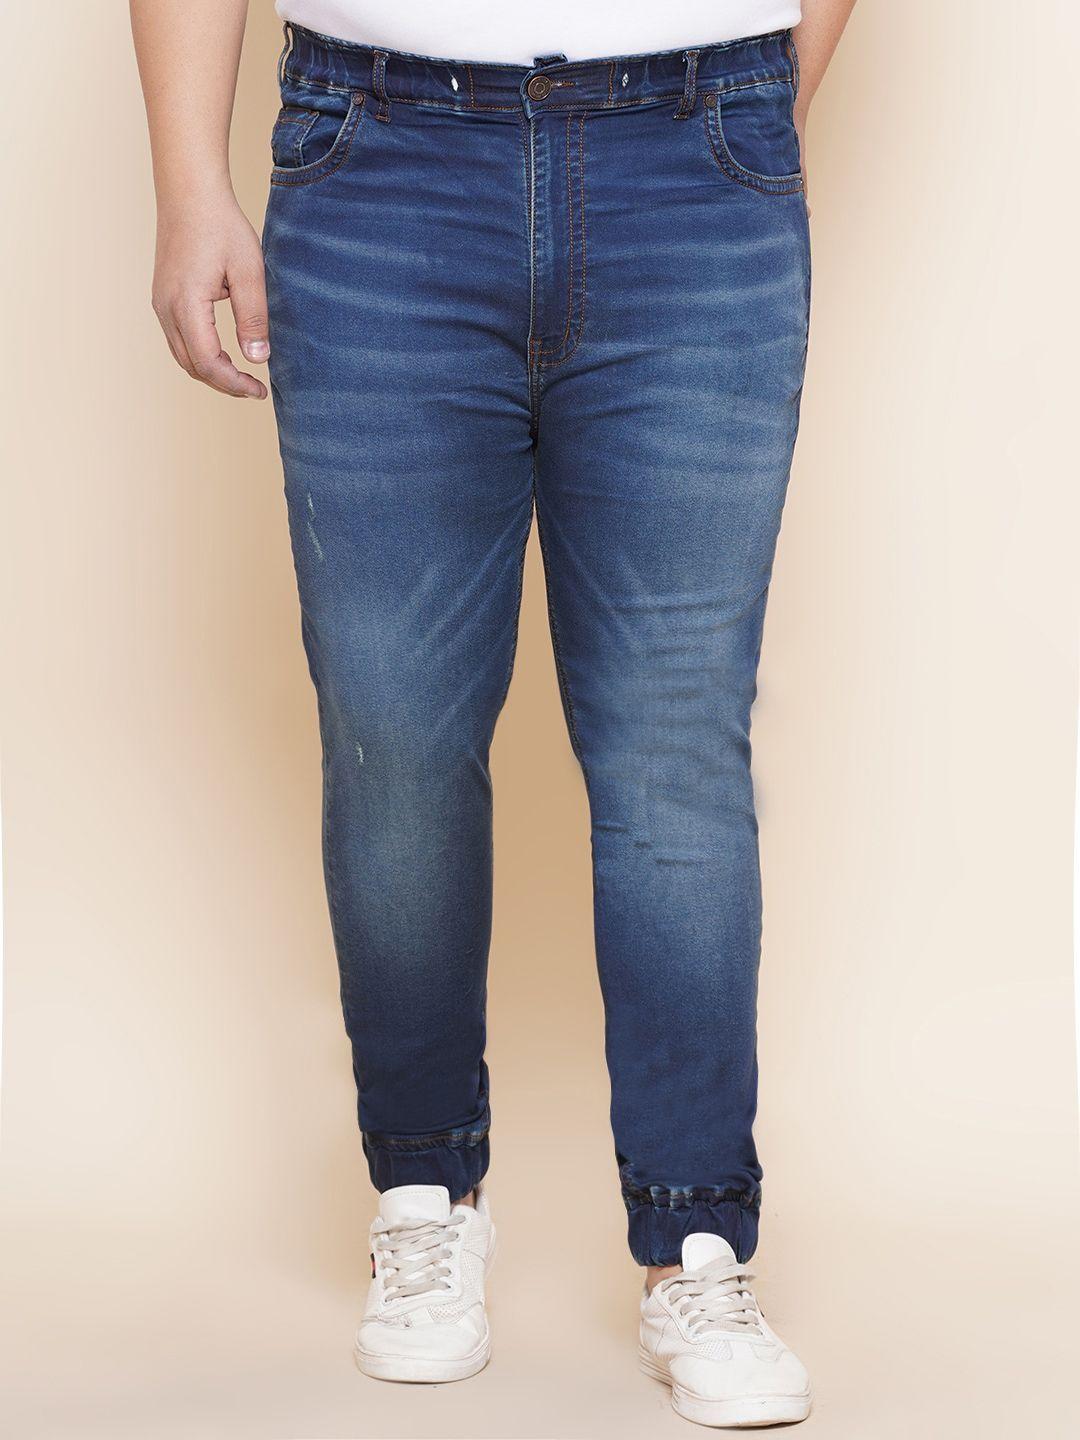 john pride men plus size regular fit light fade stretchable jeans